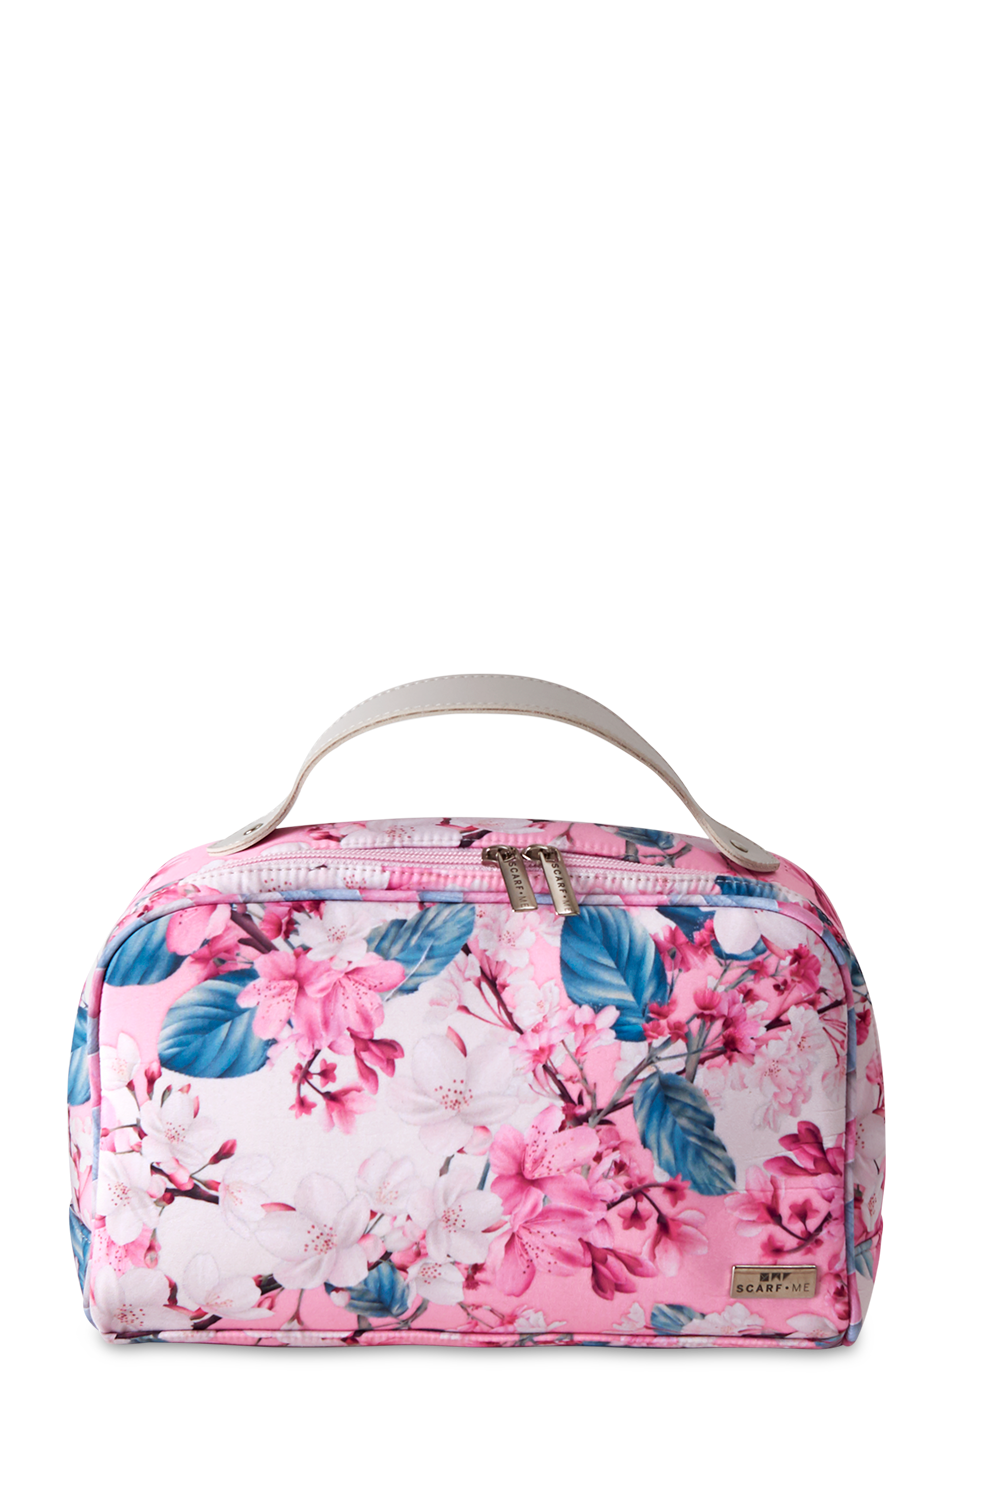 Scarf Me Sakura Benevolence Suitcase